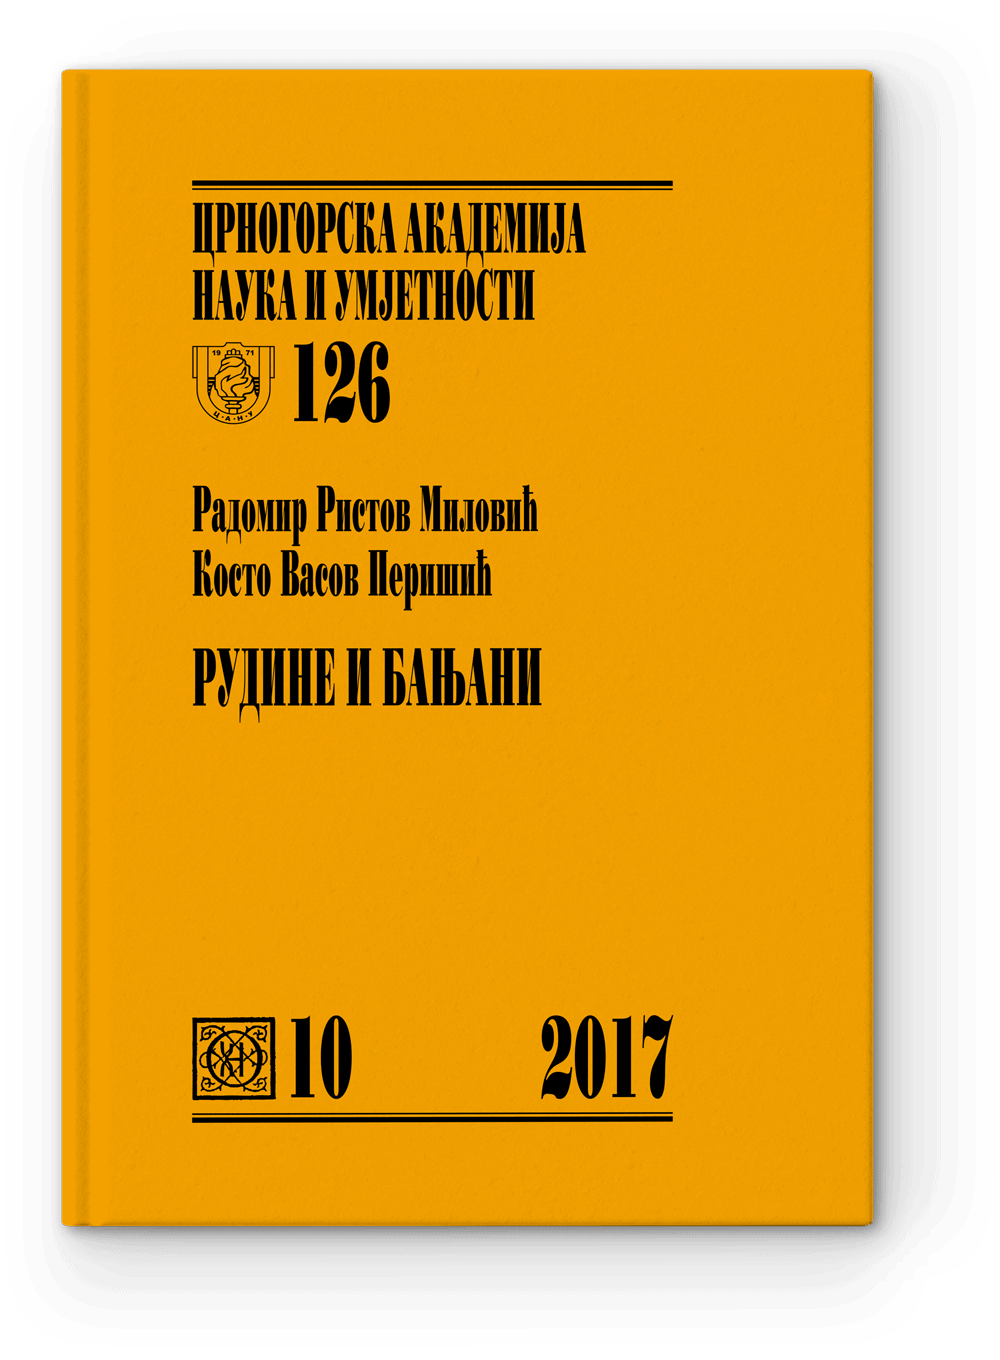 427-Milovic-Perisic-Rudine-i-Banjani